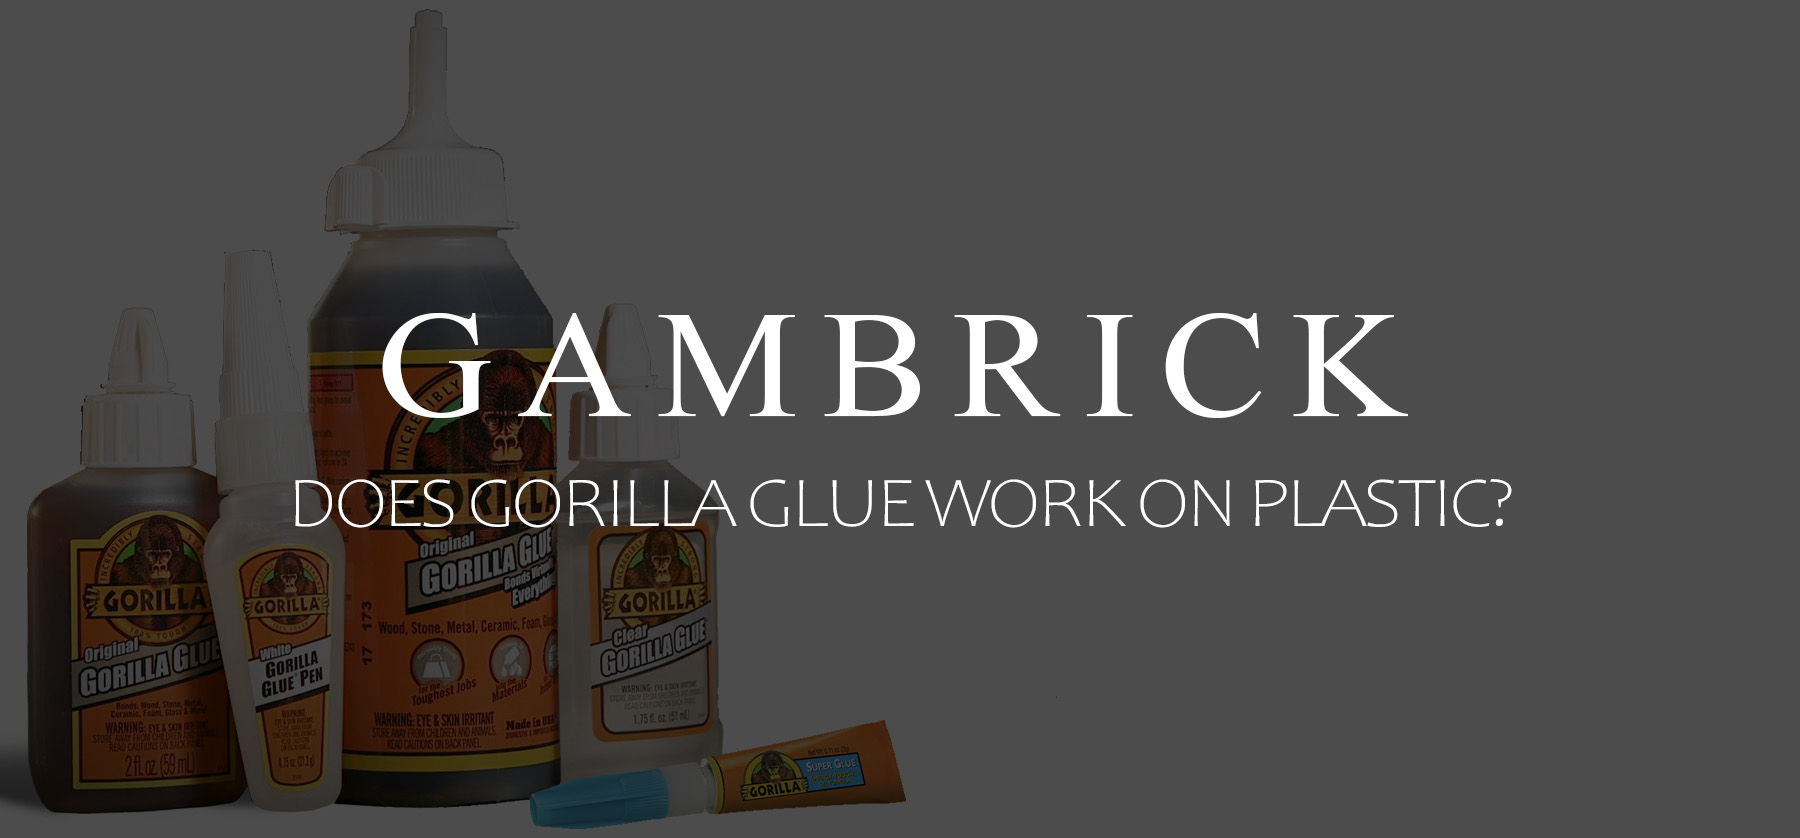 Does Gorilla Glue Work On Plastic?